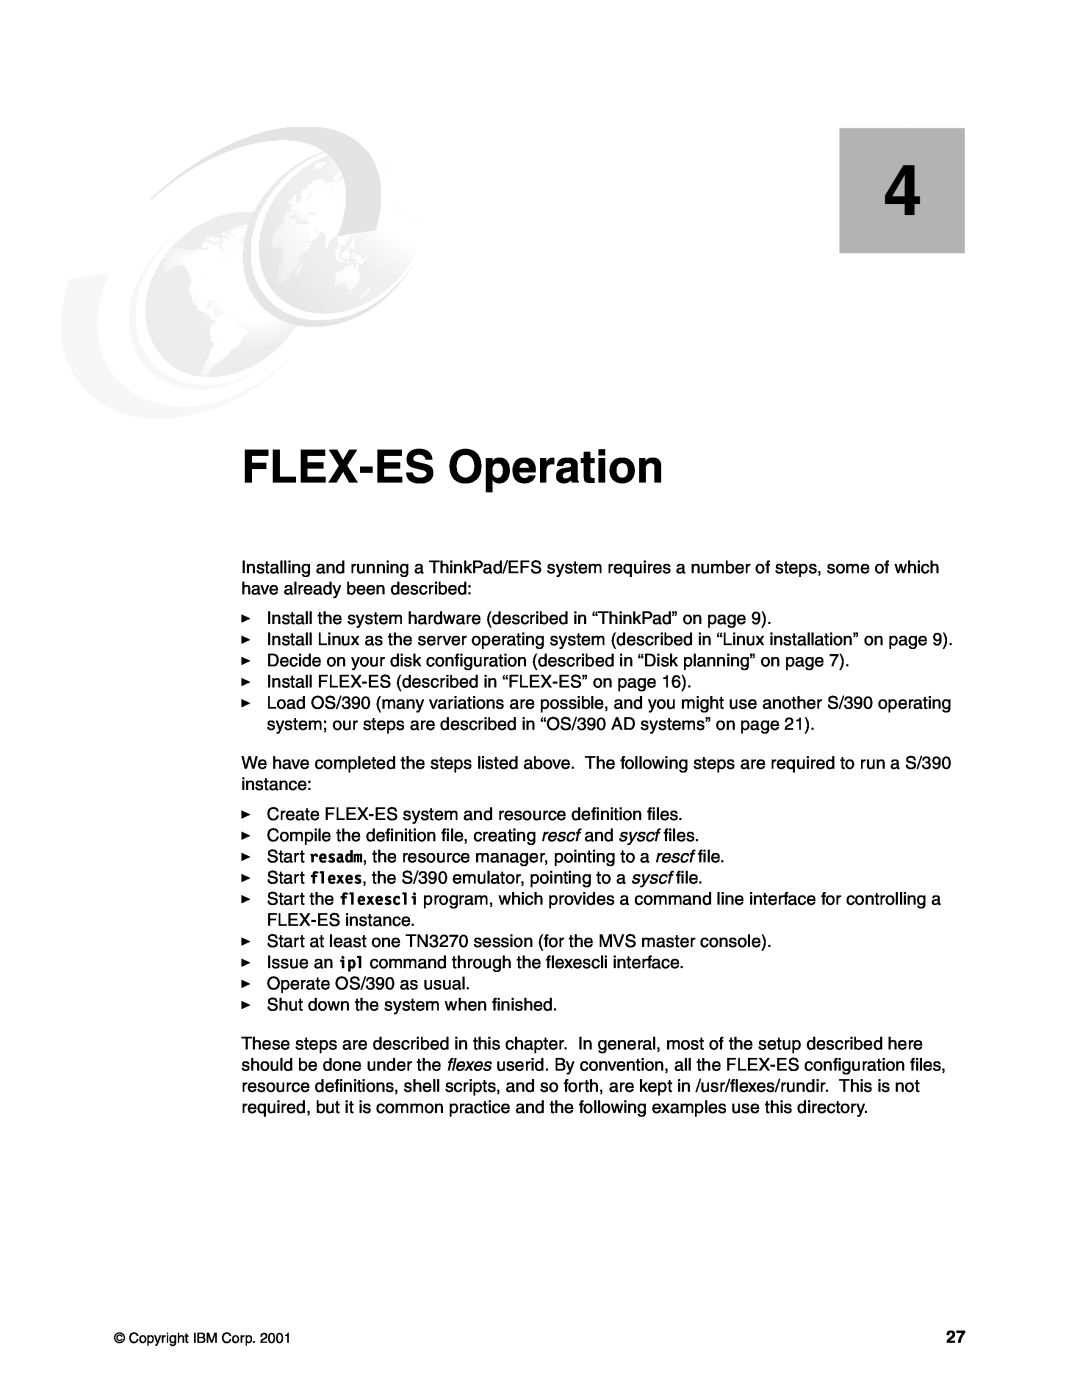 IBM s/390 manual FLEX-ES Operation 